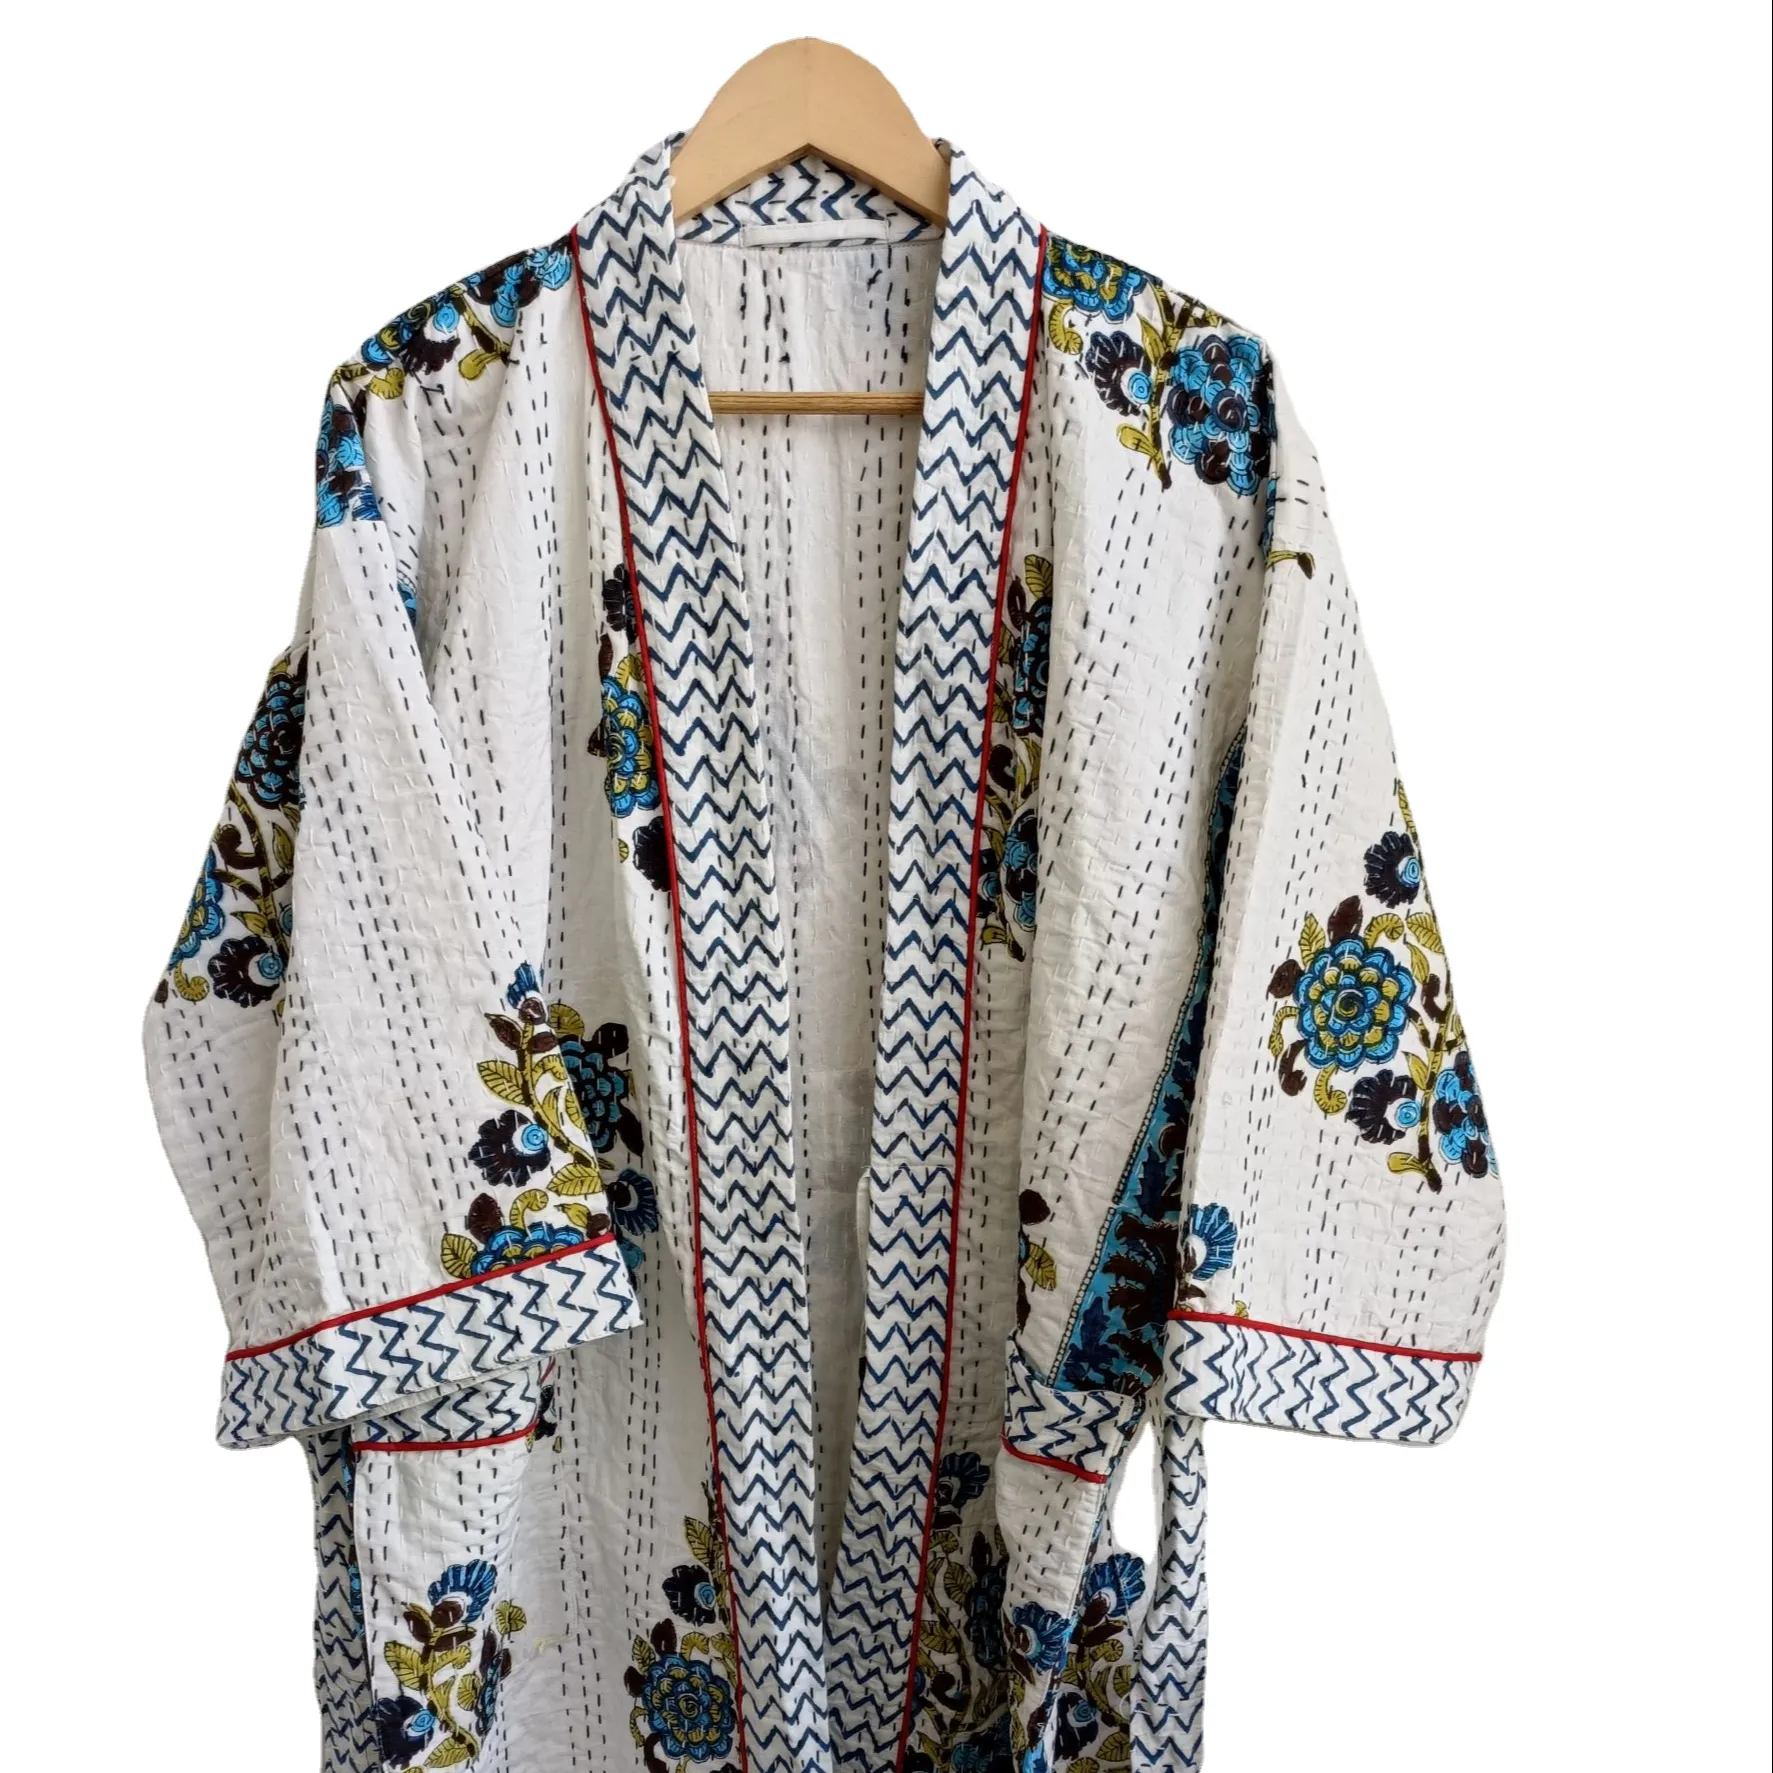 Premium quality 100 Percent Cotton Kantha White Color Kimono Robe Coverups Bath Robes Wrap Dress for women from India